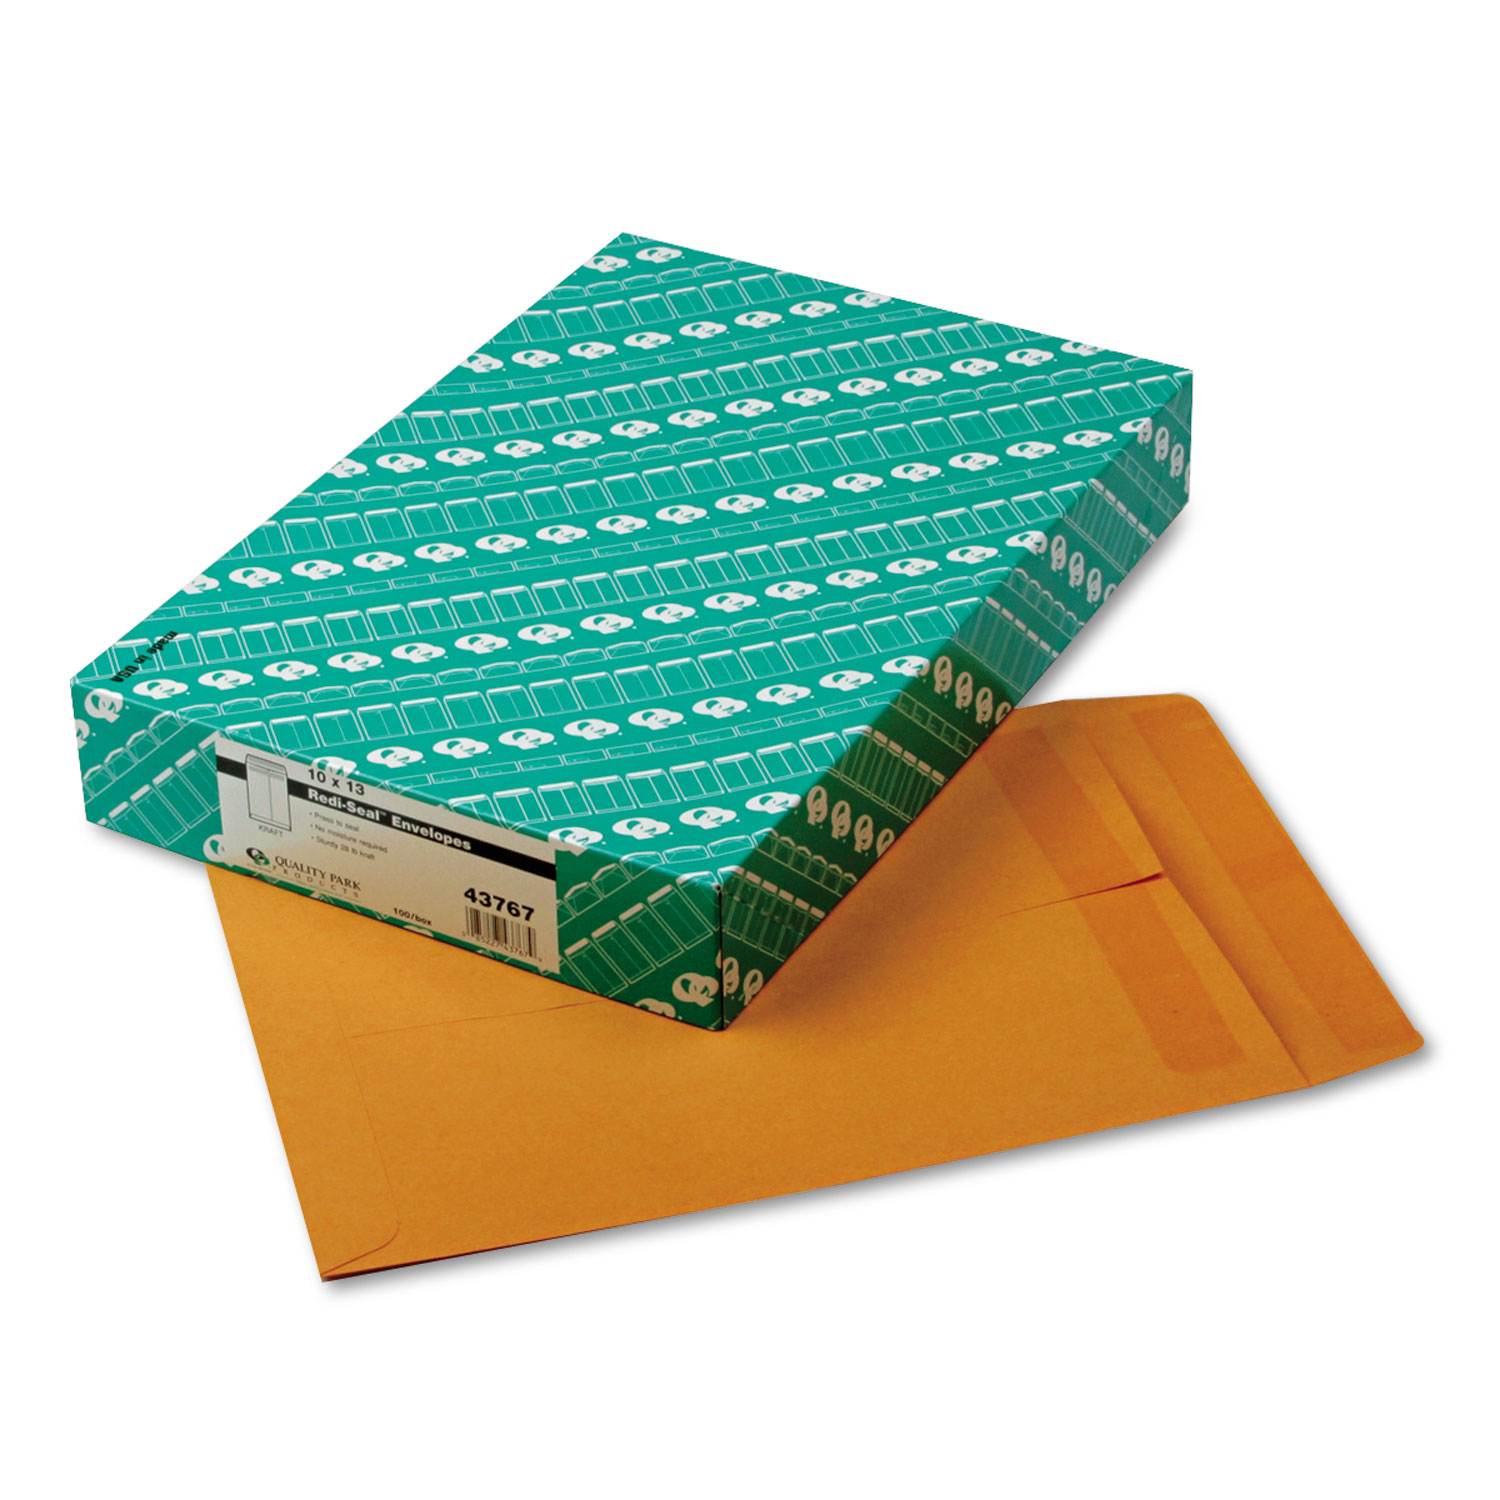  Quality Park QUA43767 Redi-Seal Catalog Envelope, #13 1/2, Cheese Blade Flap, Redi-Seal Closure, 10 x 13, Brown Kraft, 100/Box (QUA43767) 